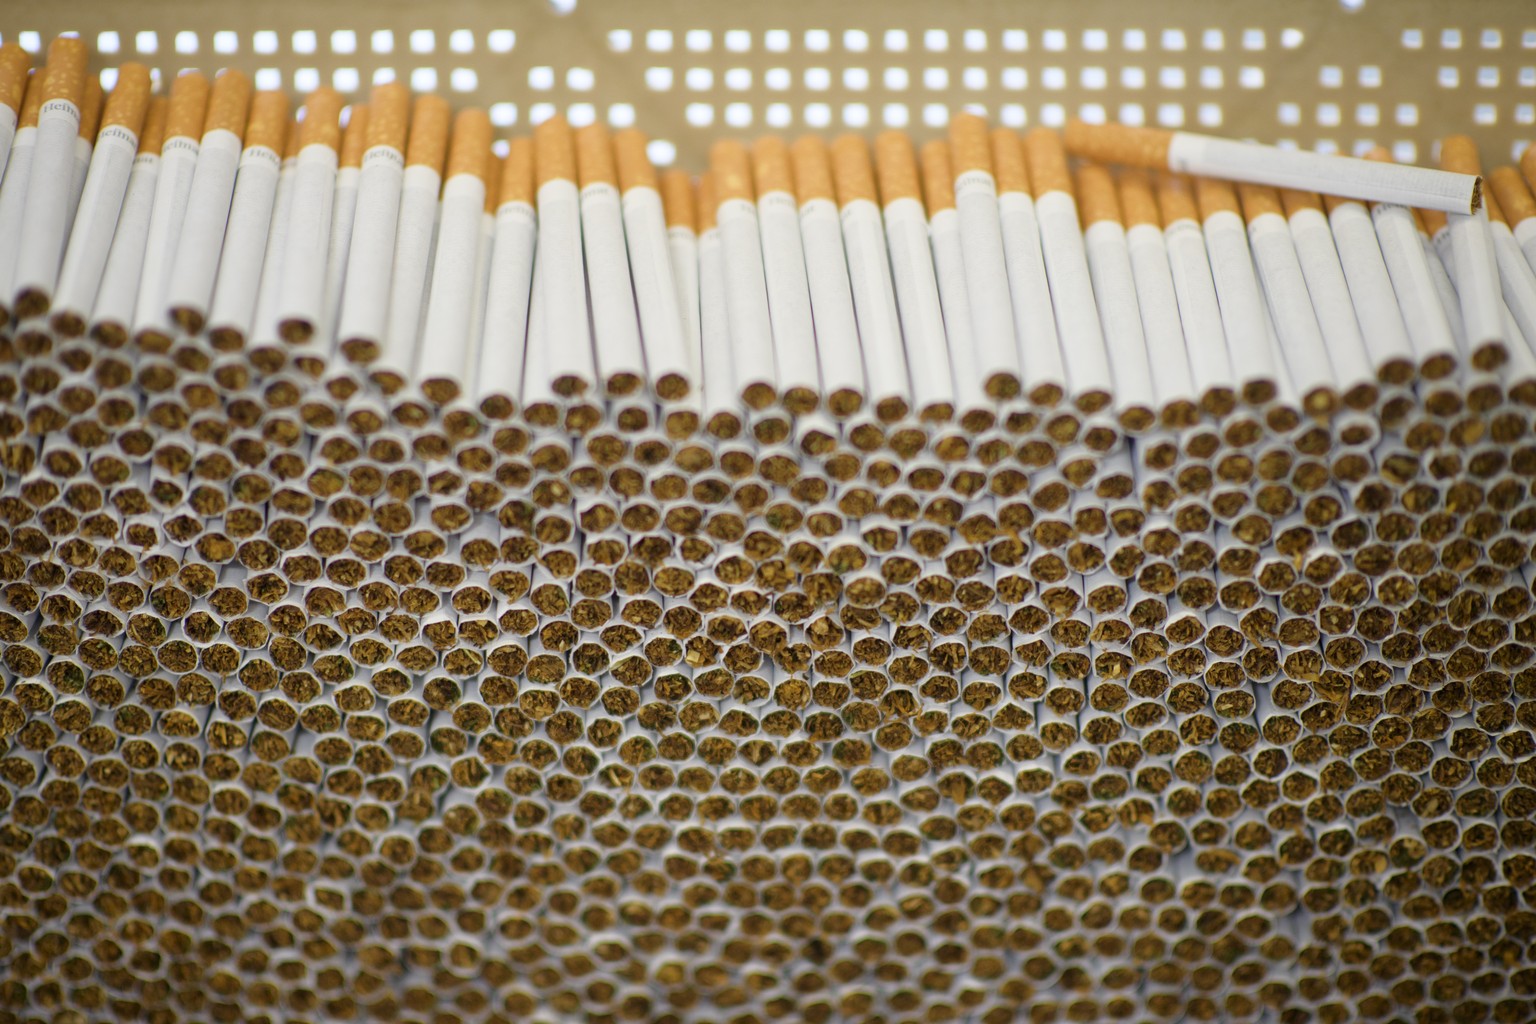 Philip Morris anwortet mit Tabak-Erhitzer IQOS auf die e-Zigarette